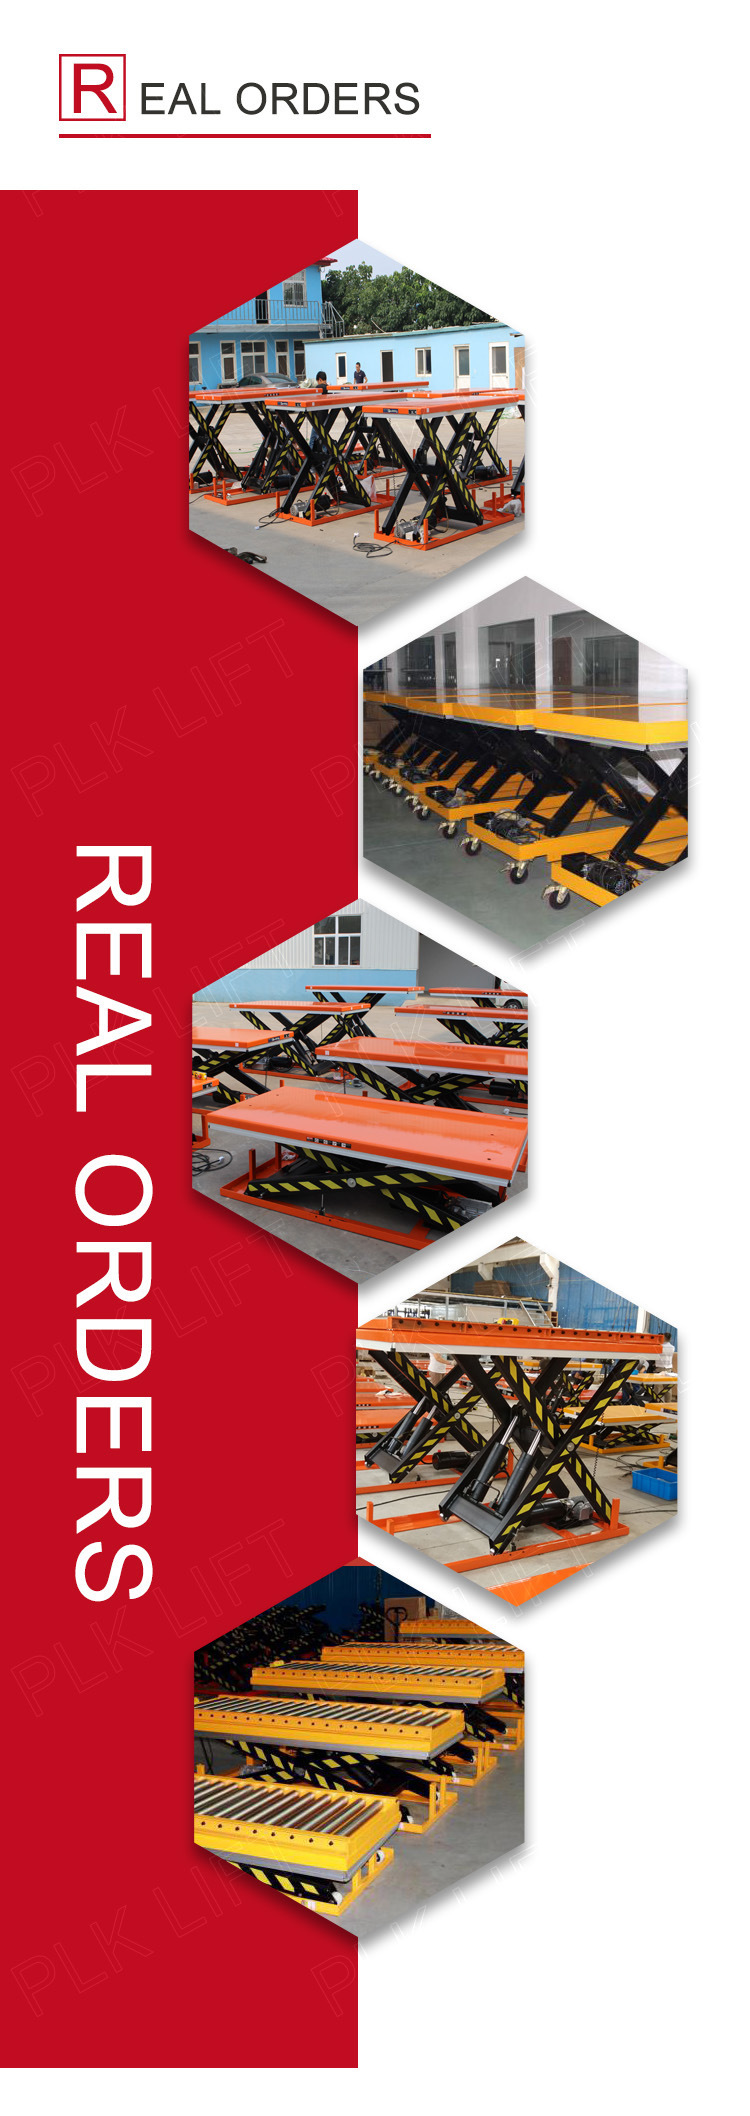 Stationary Scissor Lift Roller Conveyor Lift Table